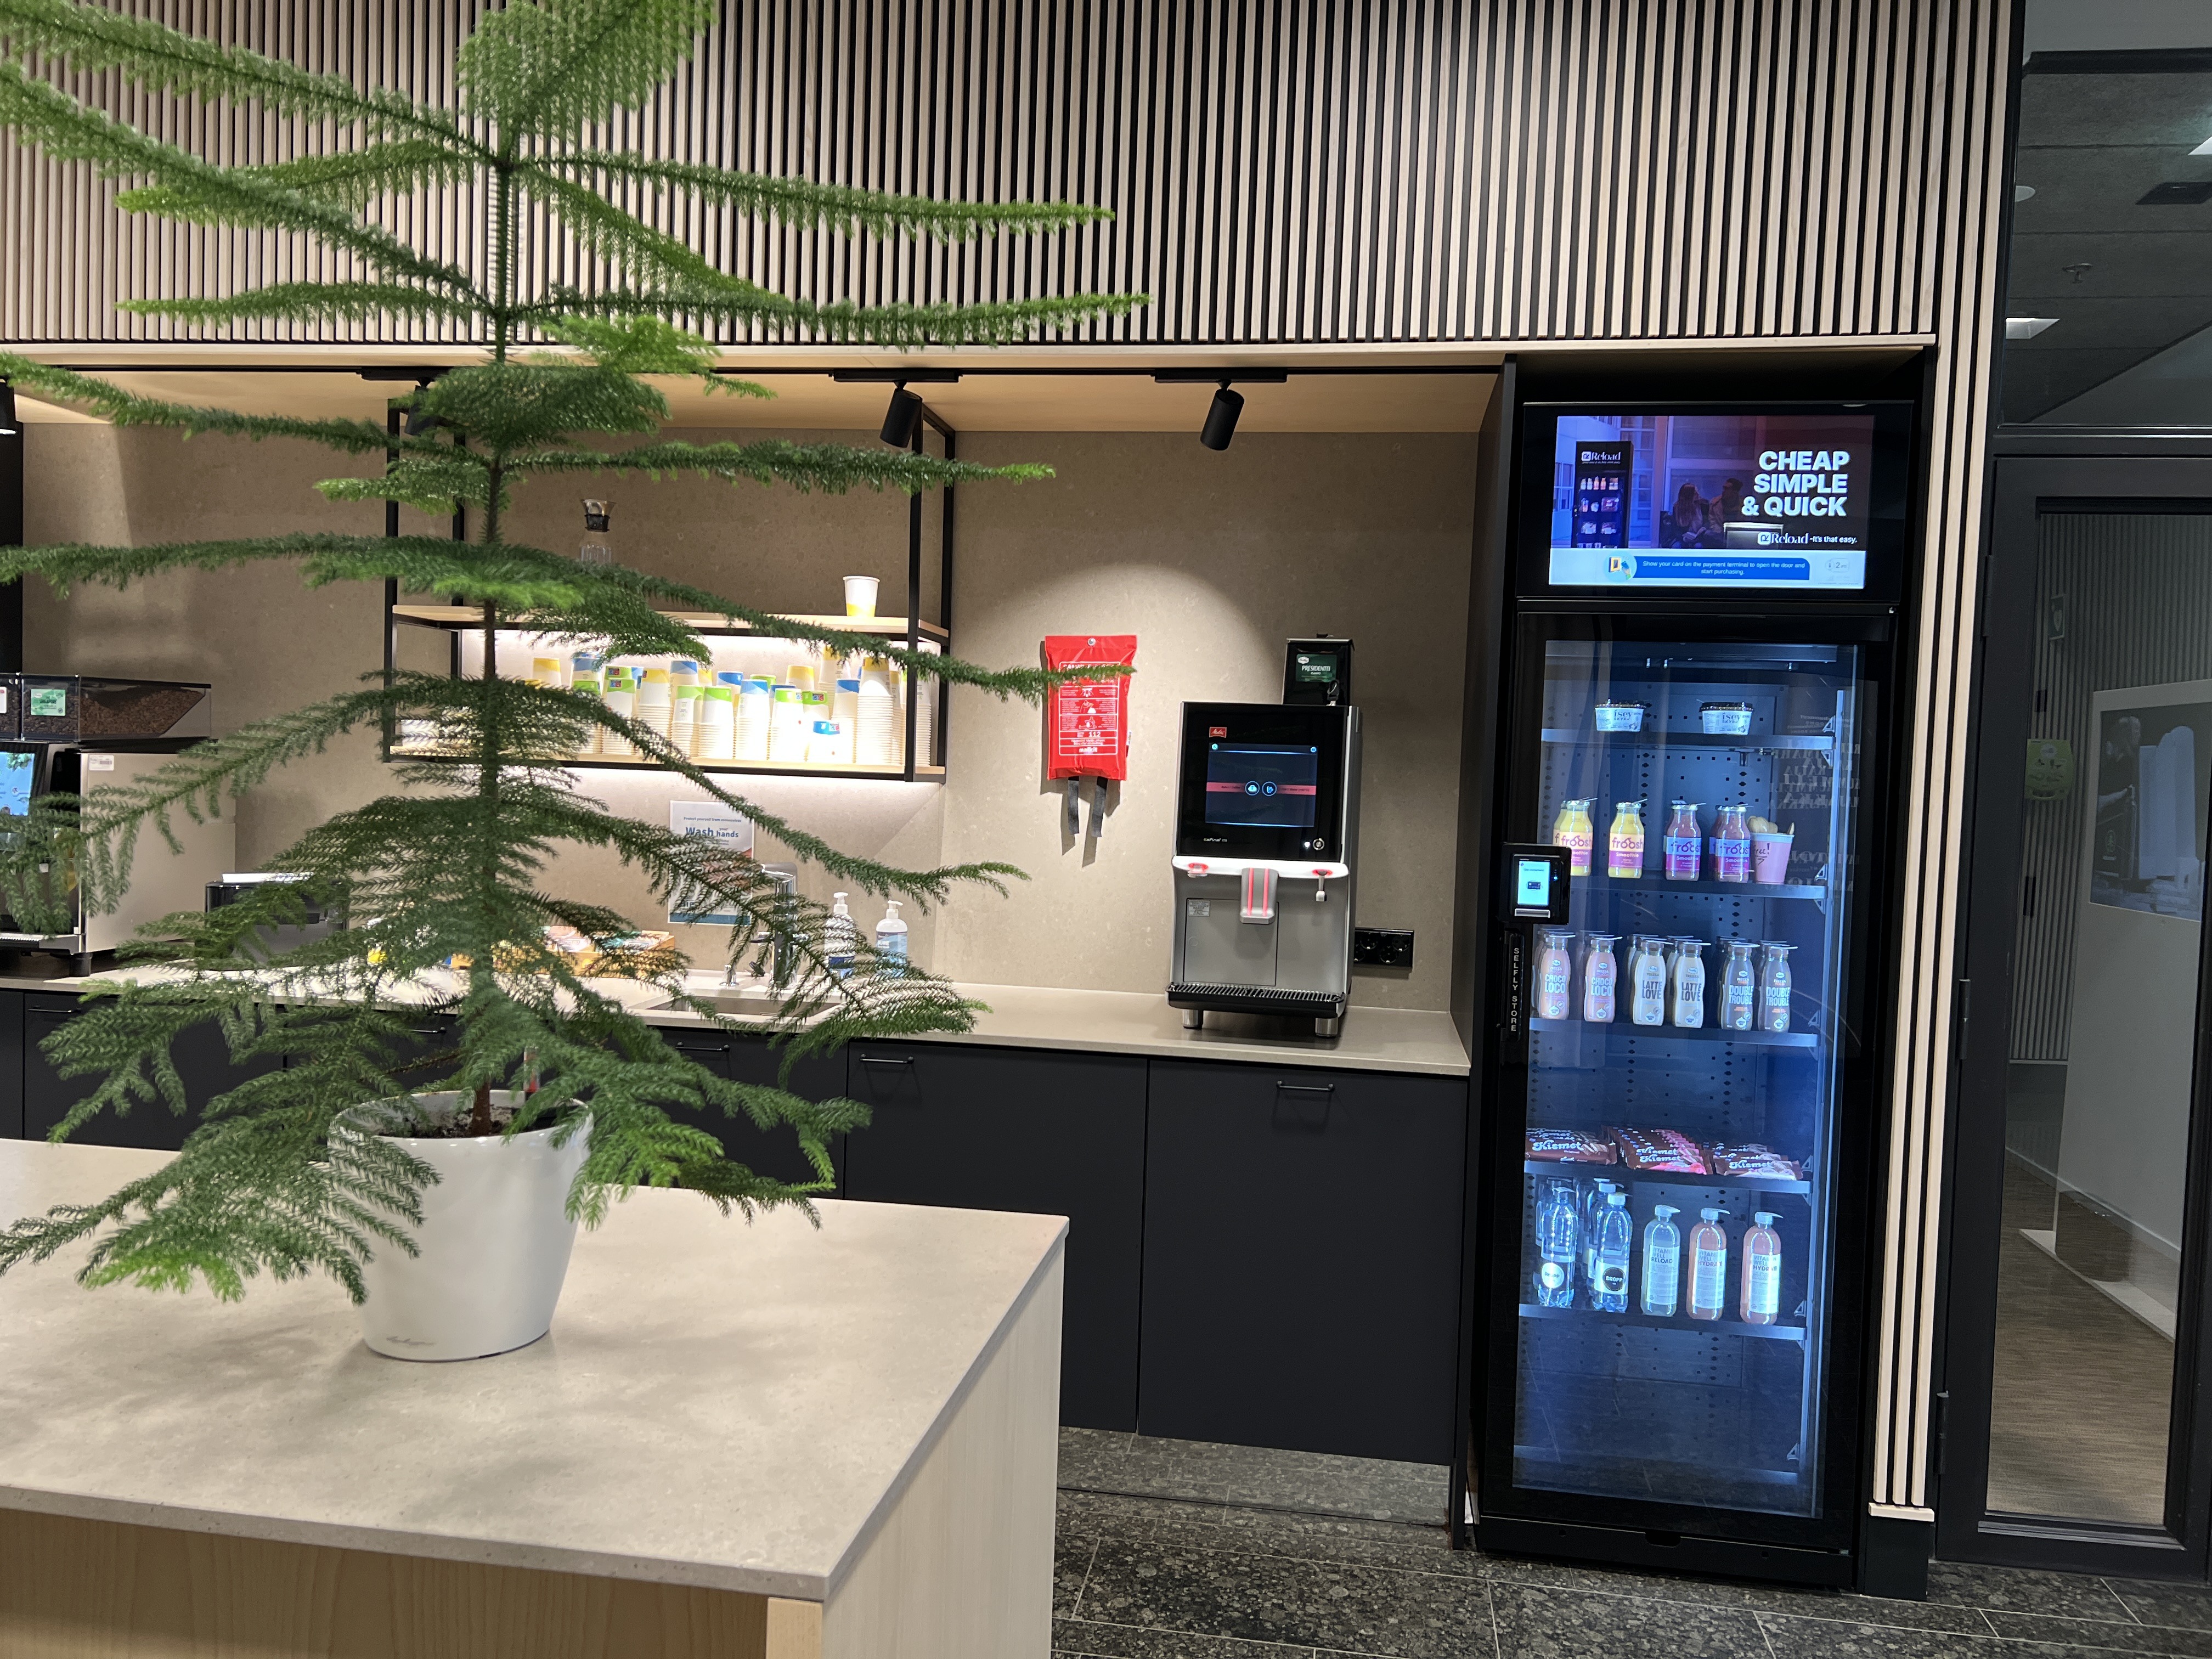 Name Company's smart food vending machine in Stora Enso's headquarters in Helsinki